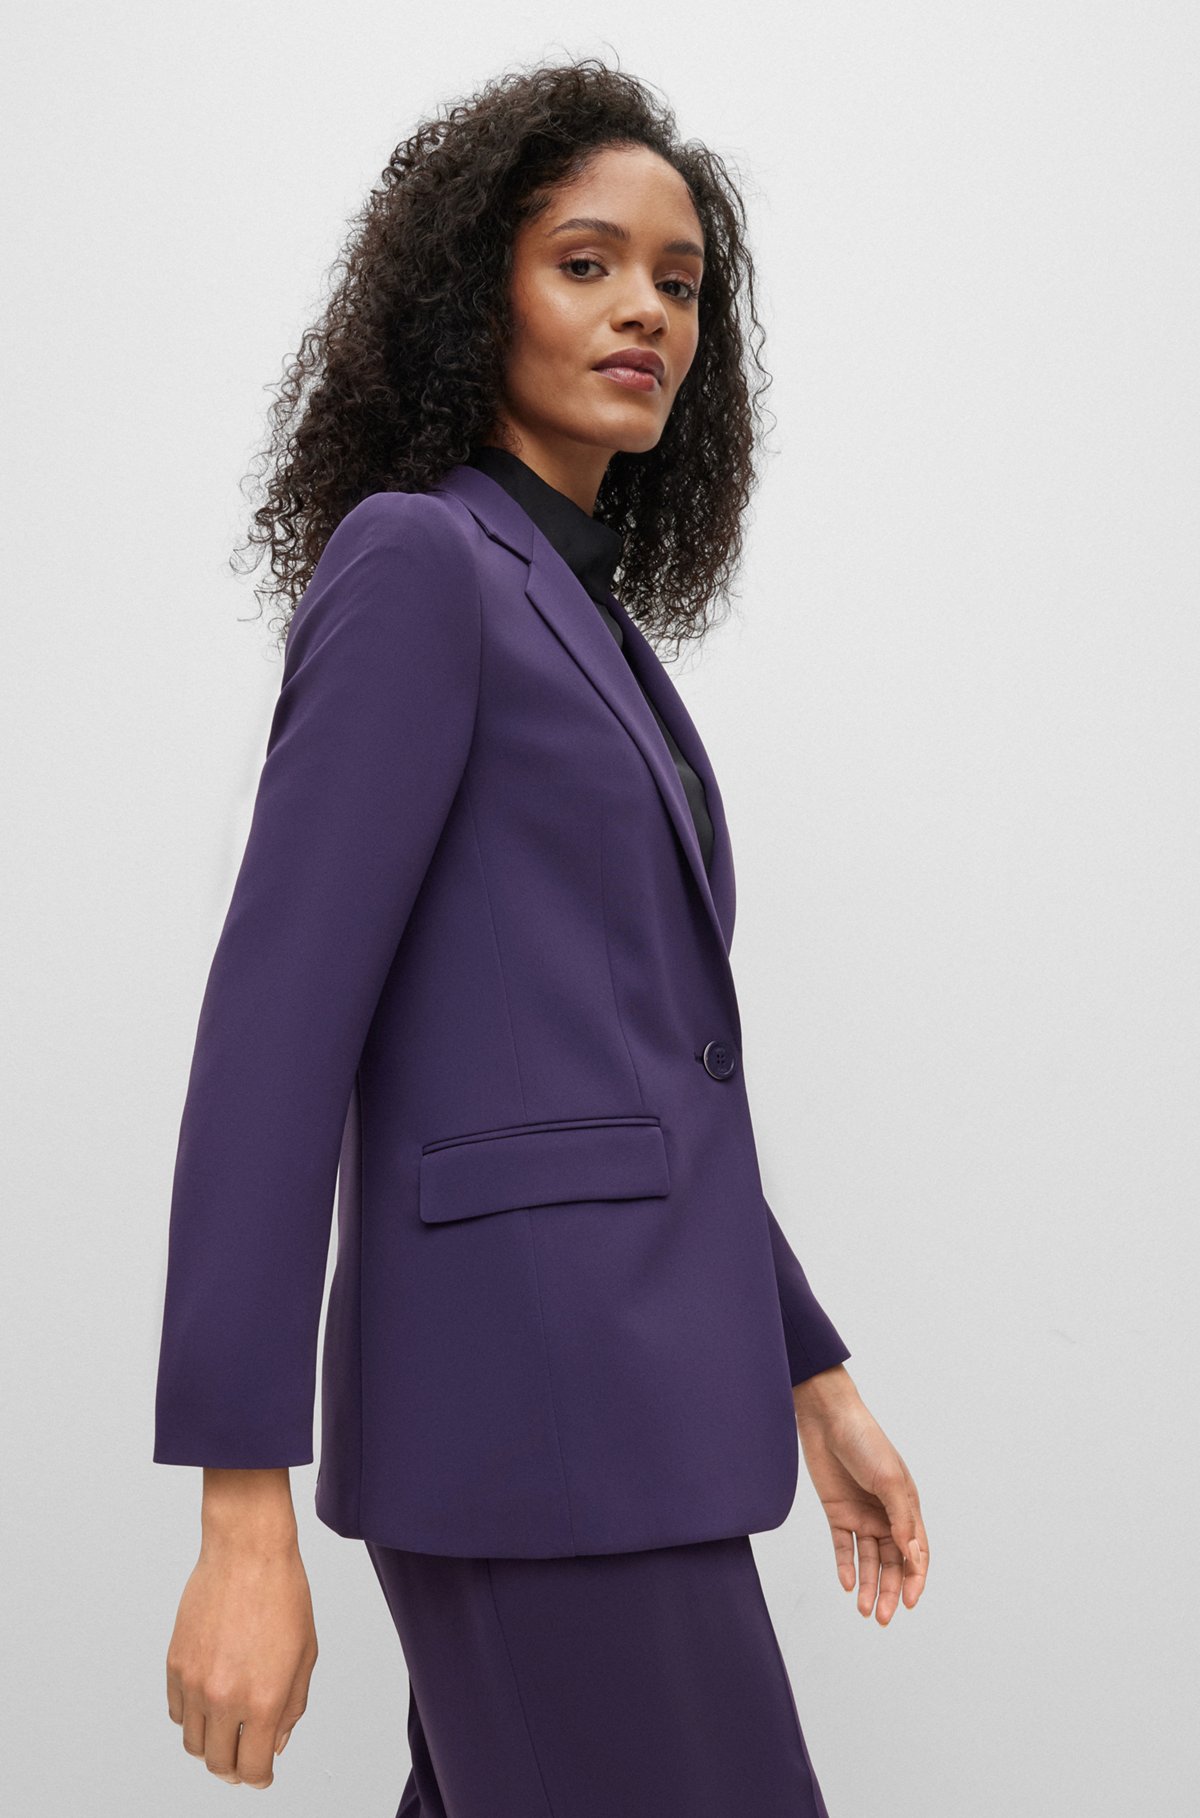 Relaxed-fit jacket in crease-resistant Japanese crepe, Dark Purple